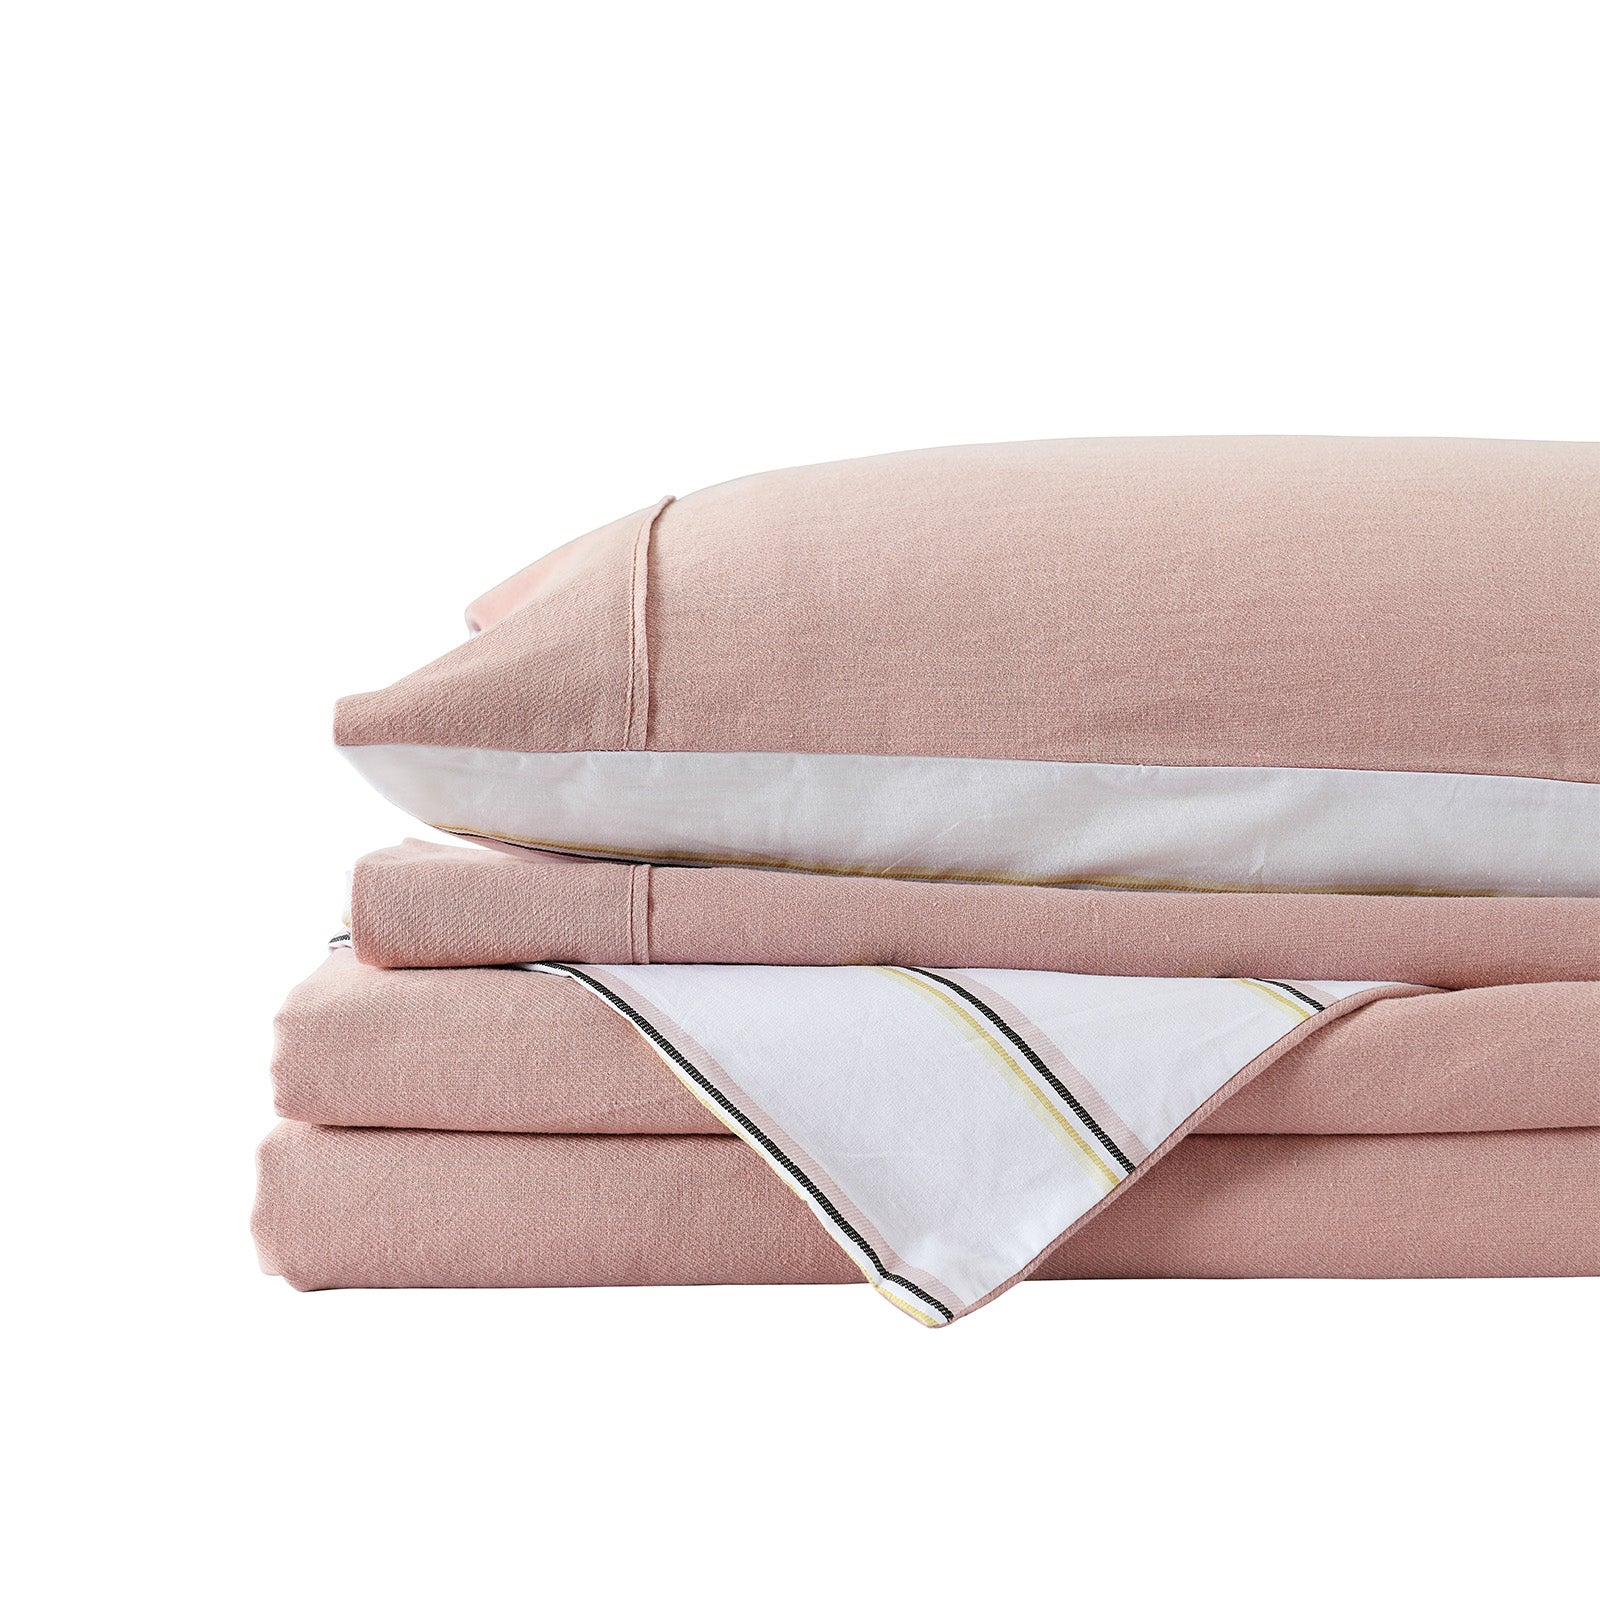 Hemp Braid Cotton Blend Quilt Cover Set Reverse Stripe Bedding - Queen - Dusk Pink